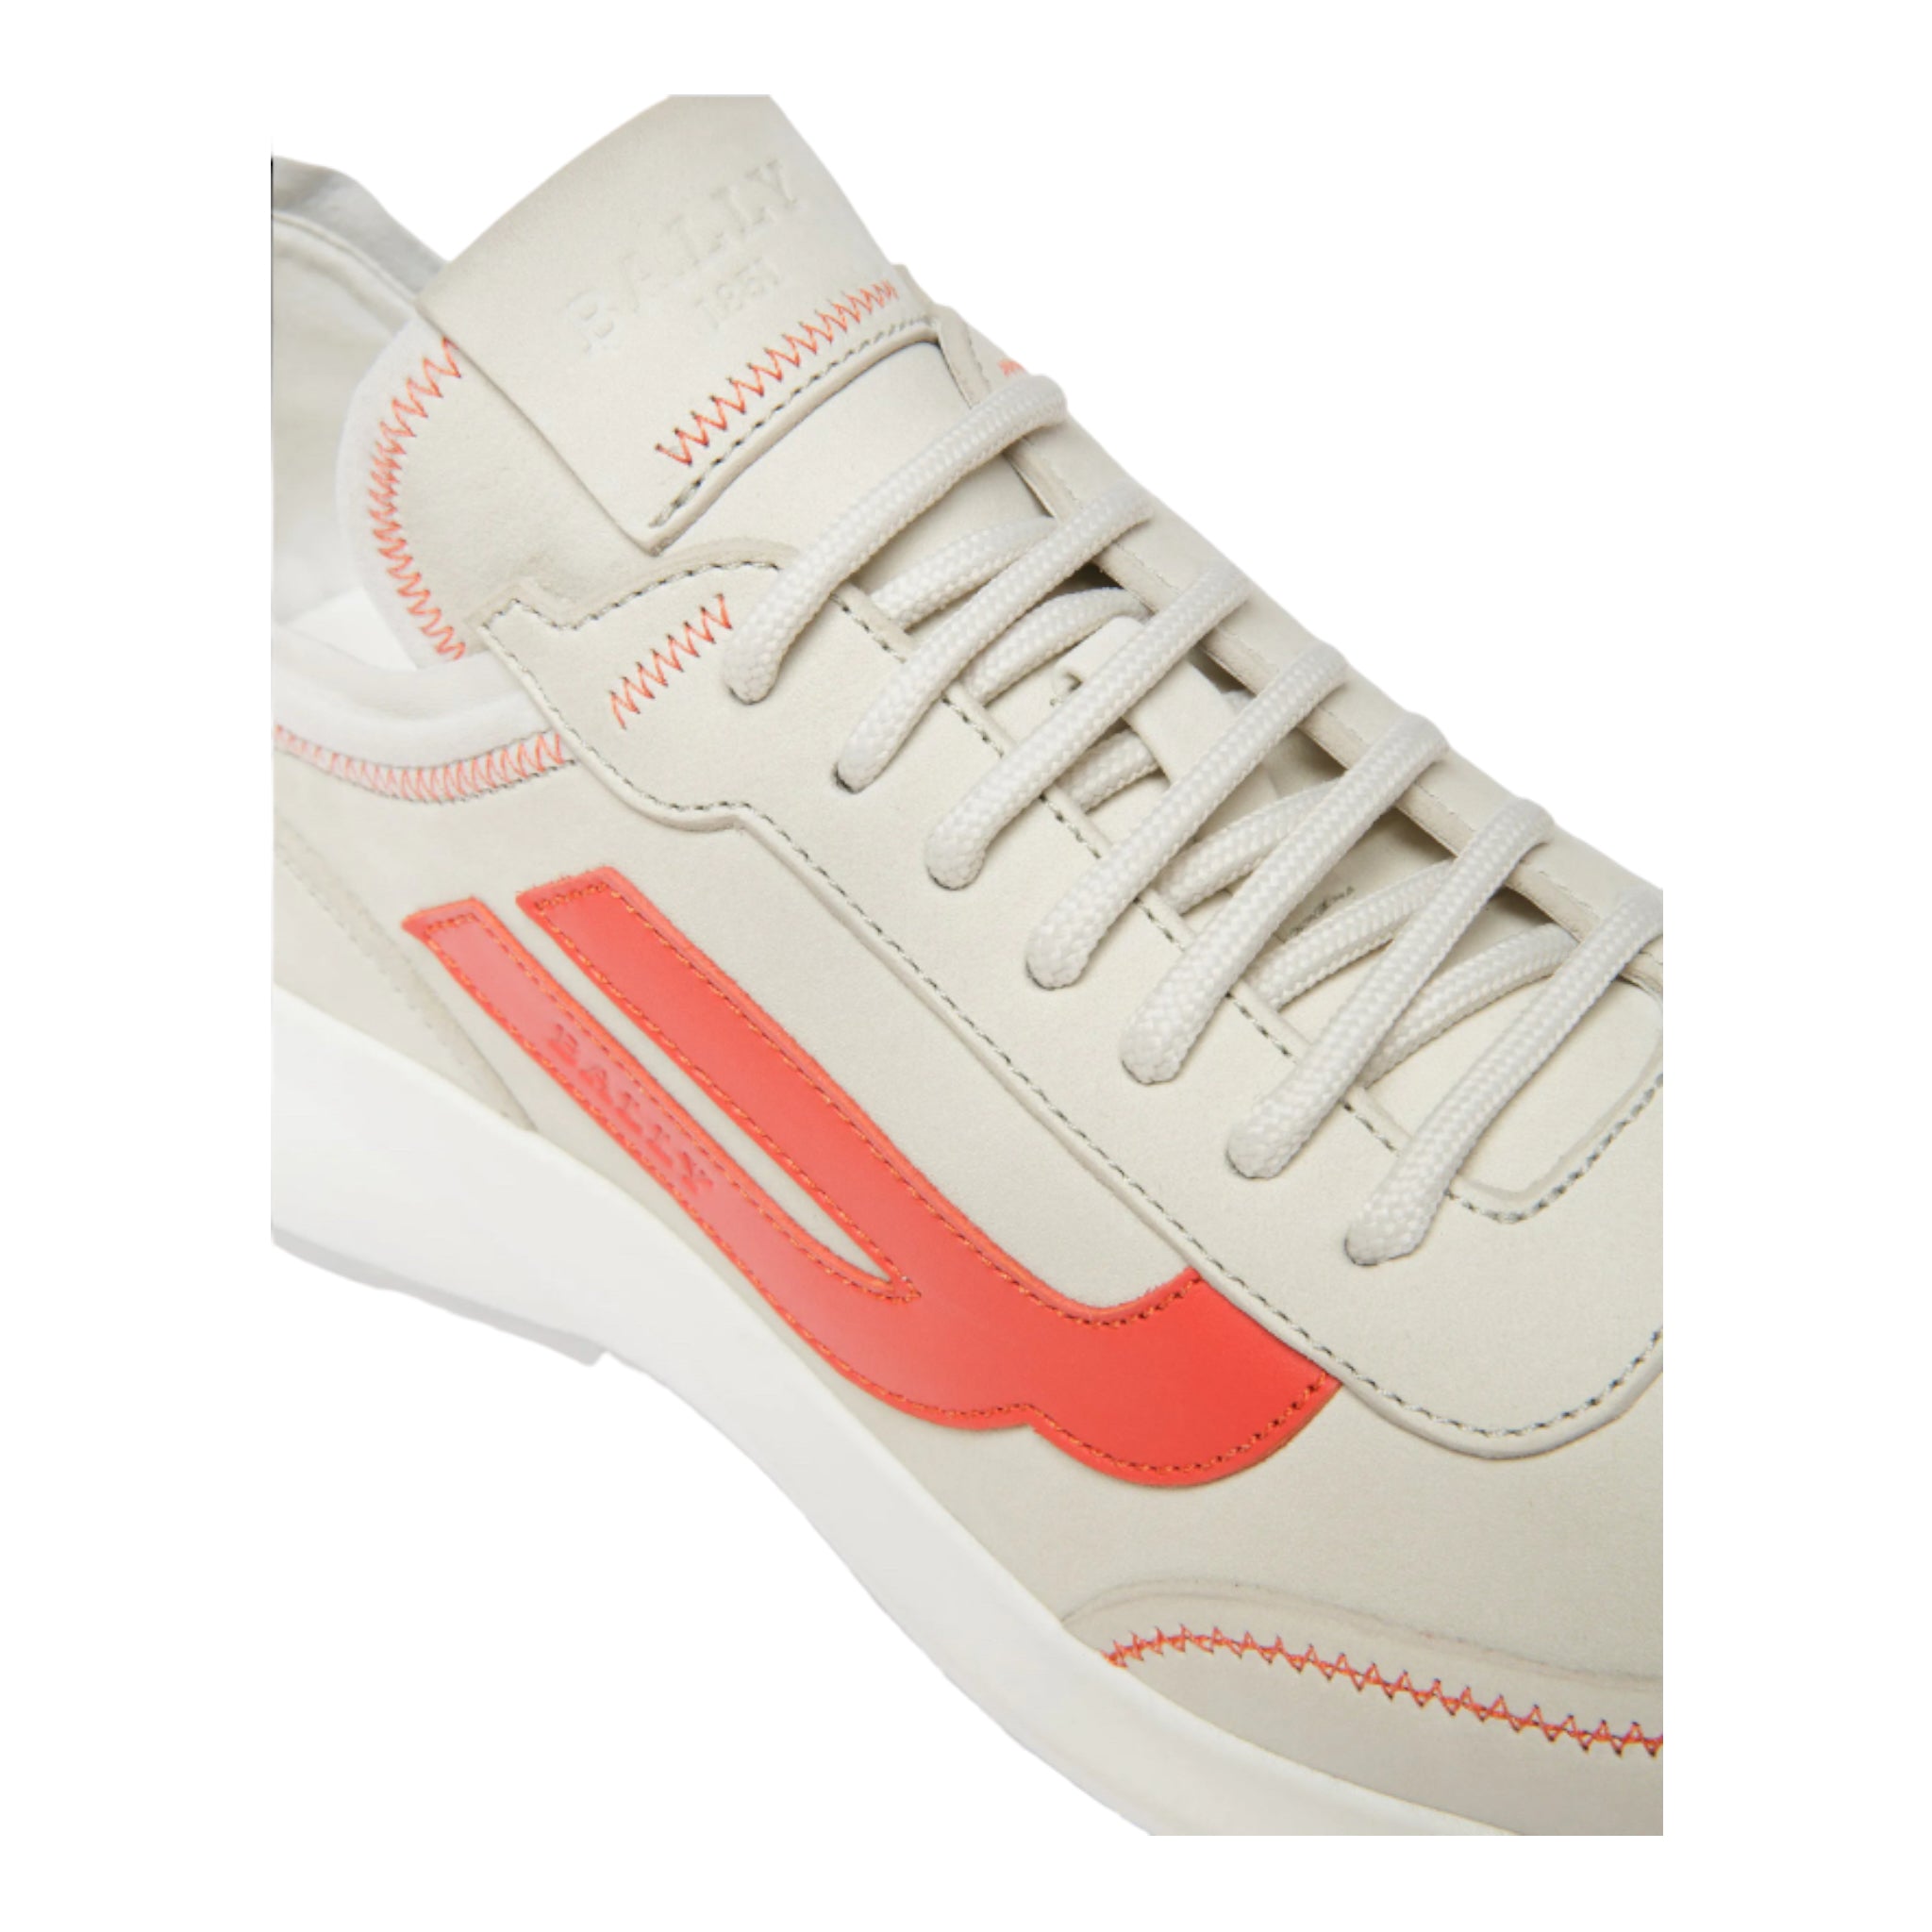 Women's Persephone Sneakers - Universal Thread - White Fashion Sneaker,  Size 8 196983073787 | eBay